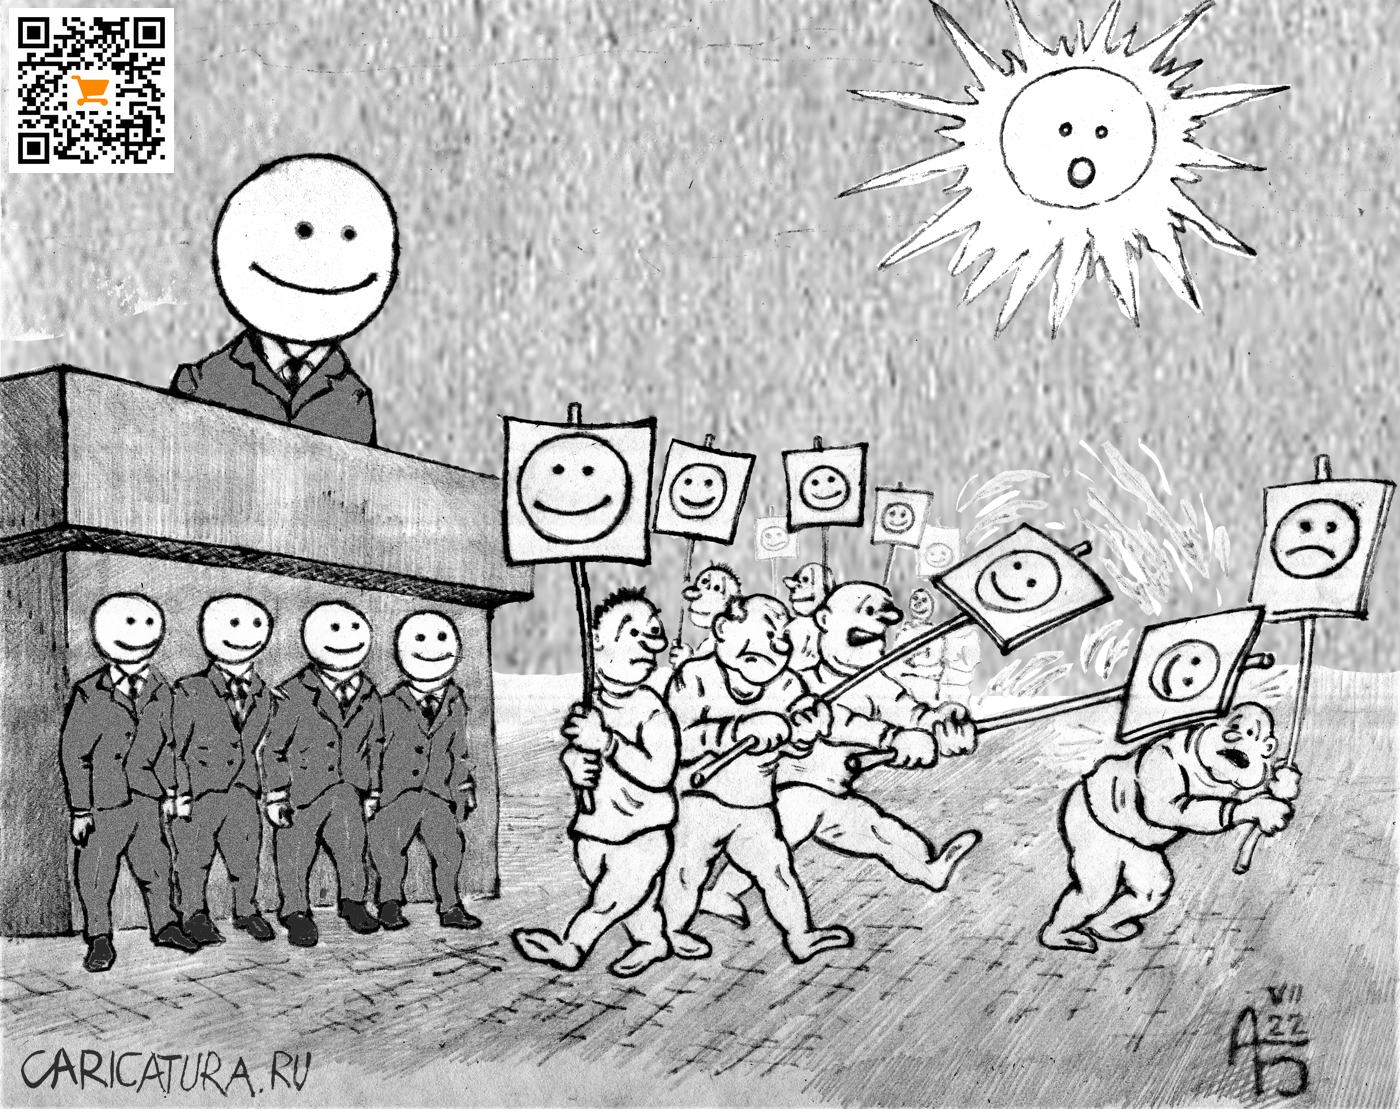 Карикатура "Изгой", Александр Богданов